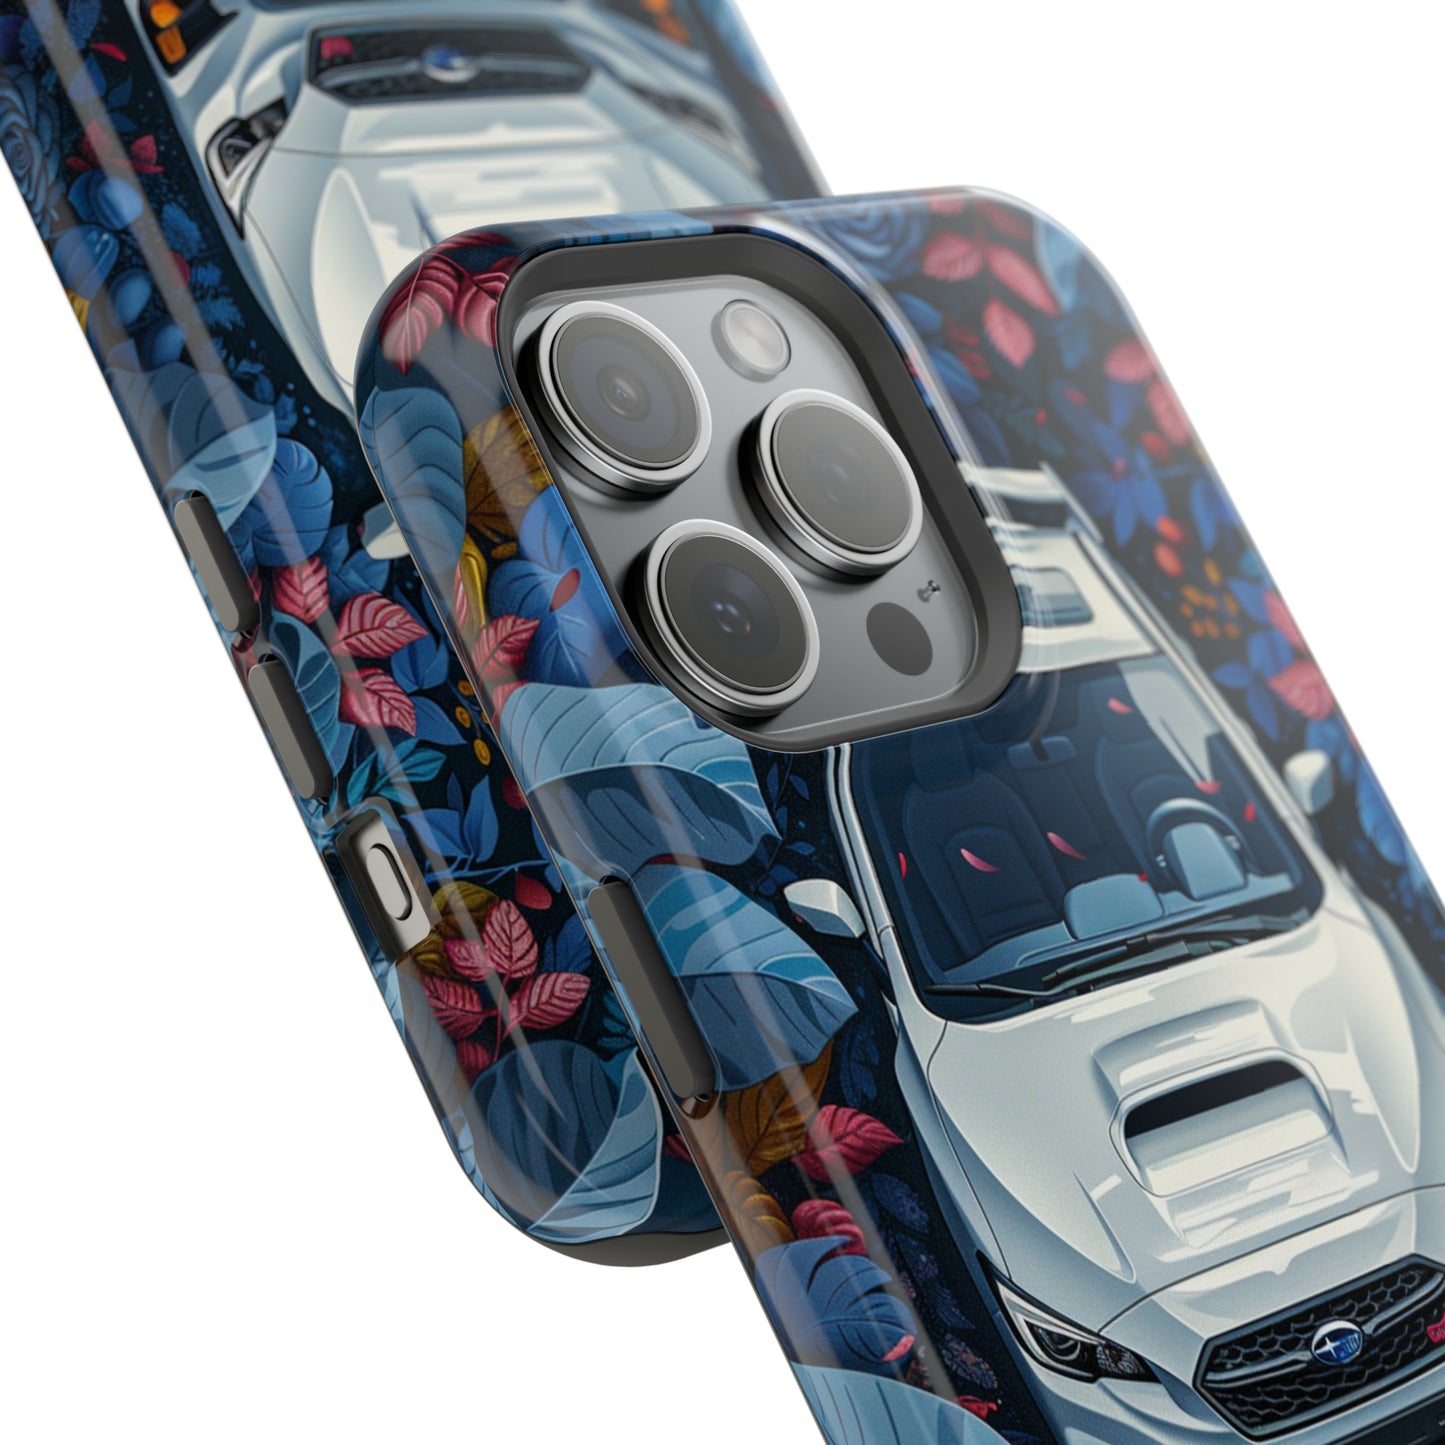 Subaru WRX STi White Floral Print Magsafe Tough iPhone Case